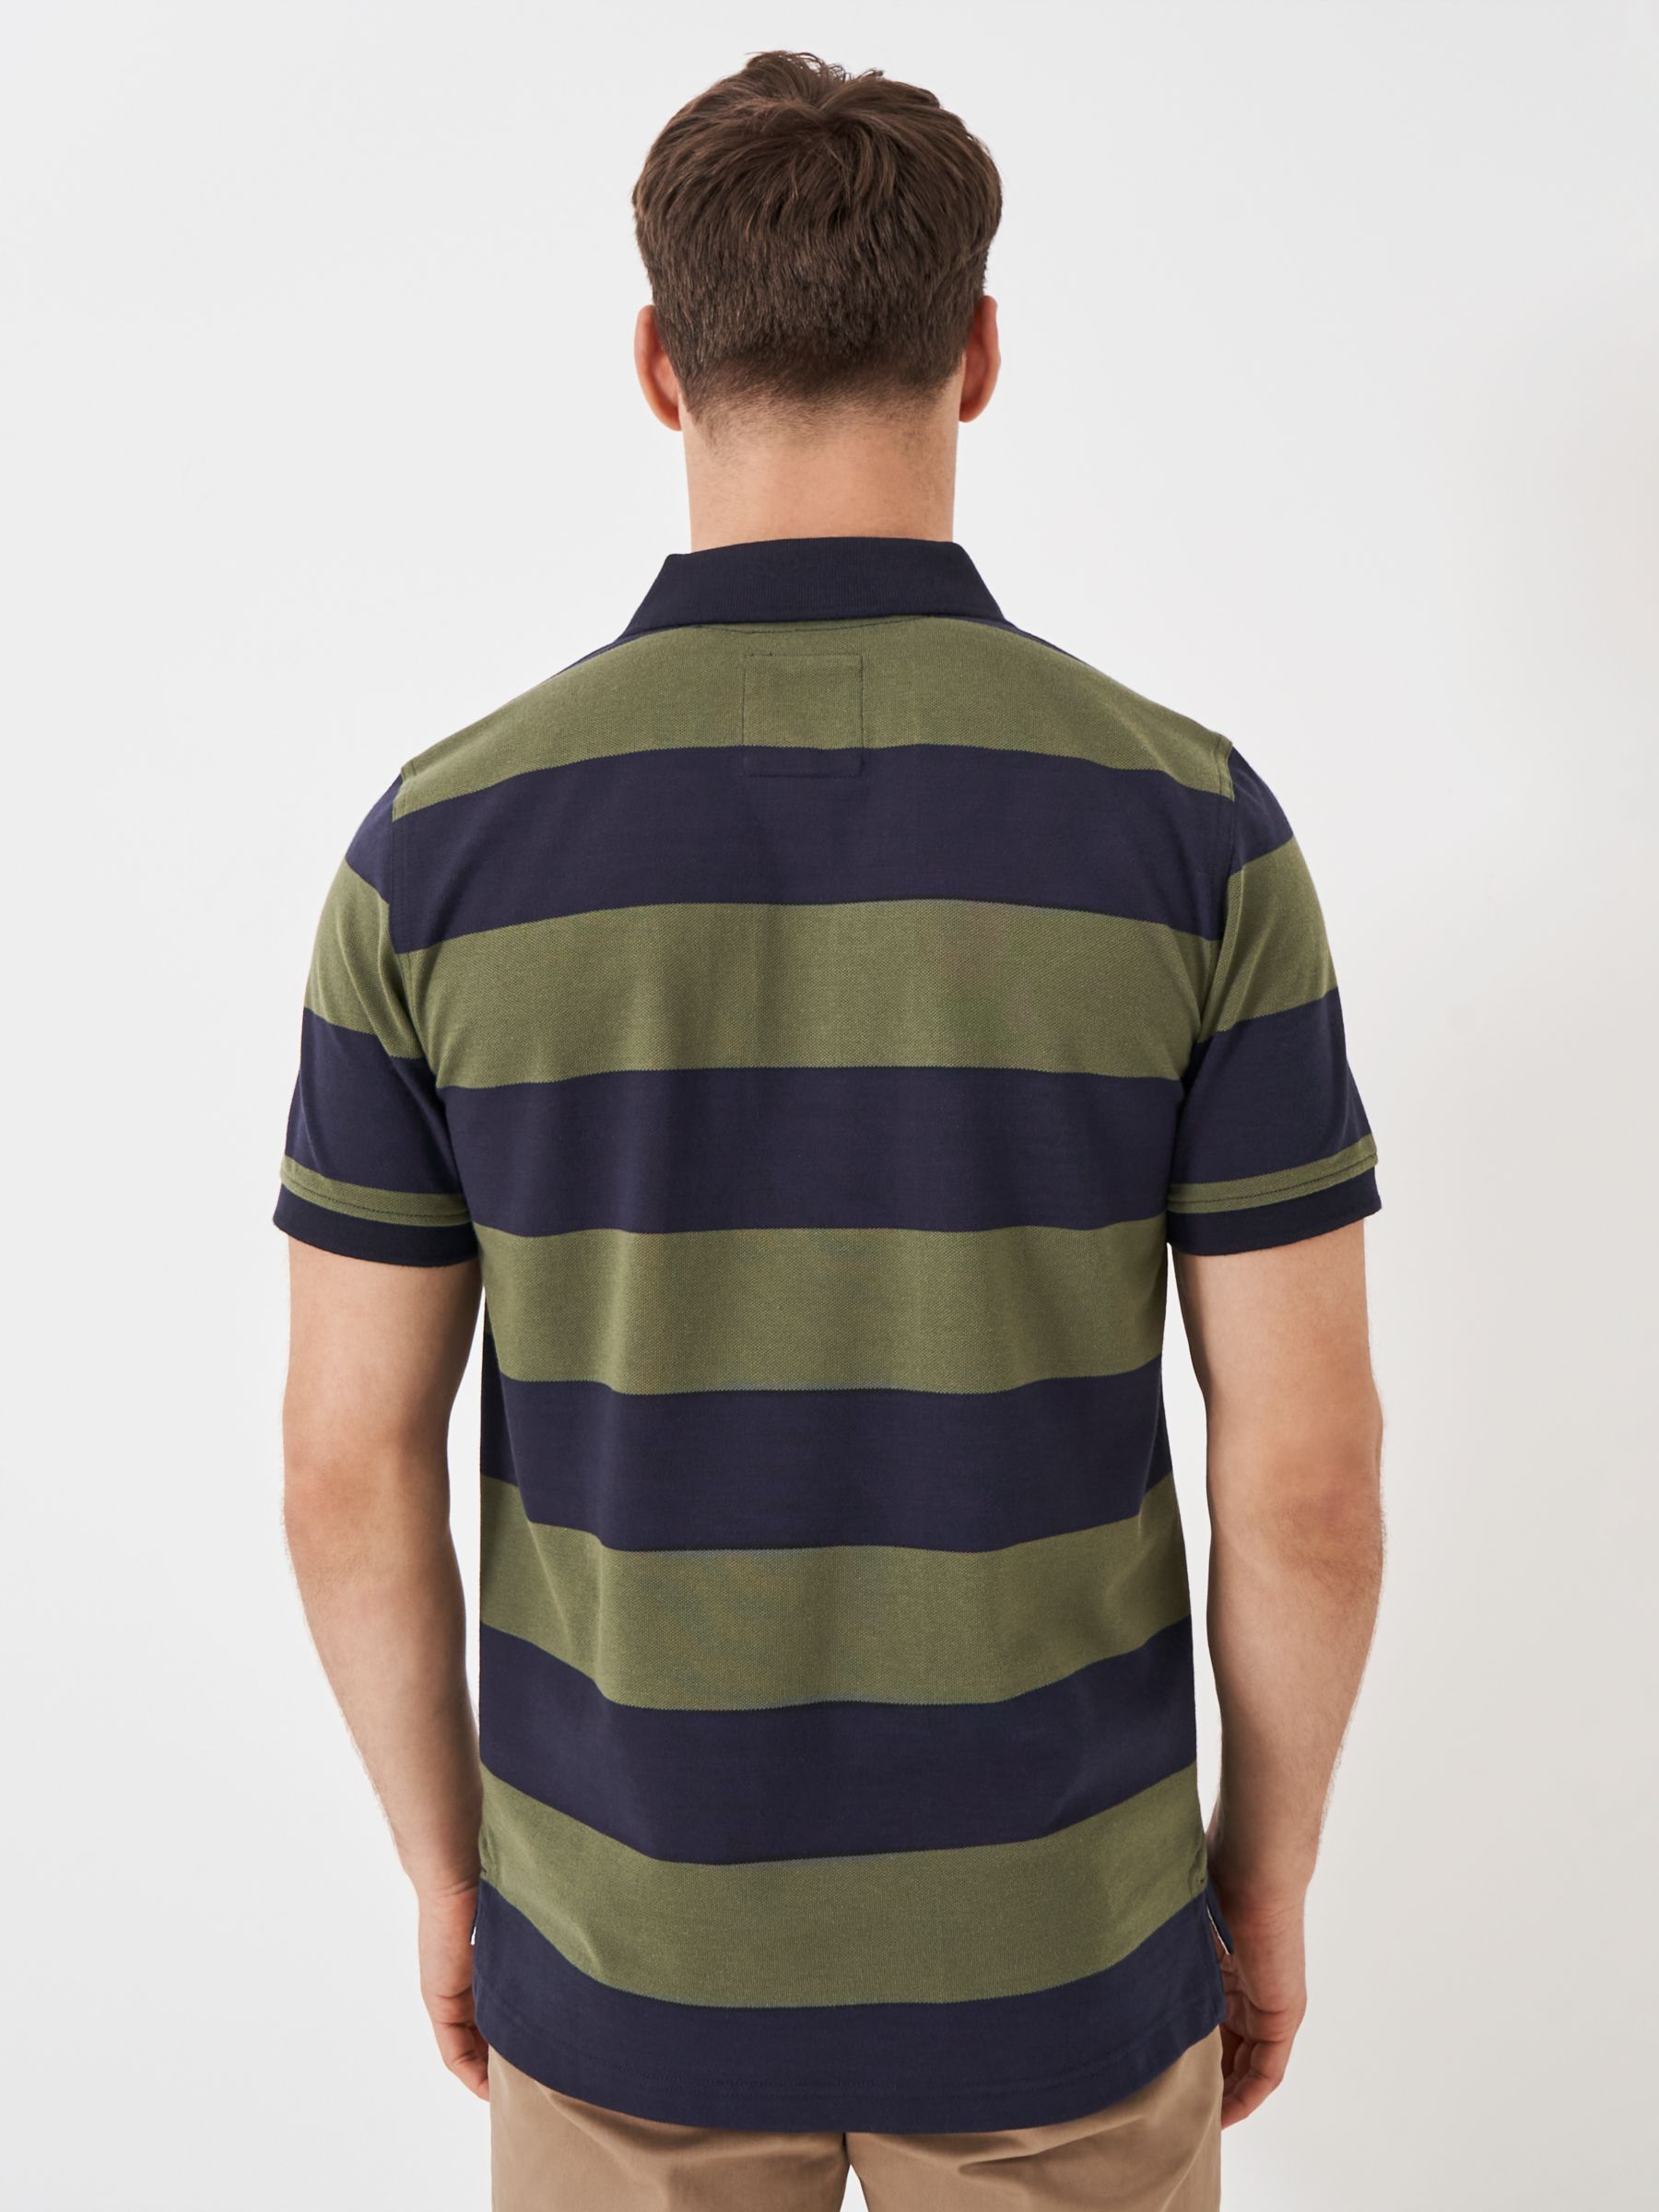 Crew Clothing Stripe Polo Shirt, Olive/Navy, L